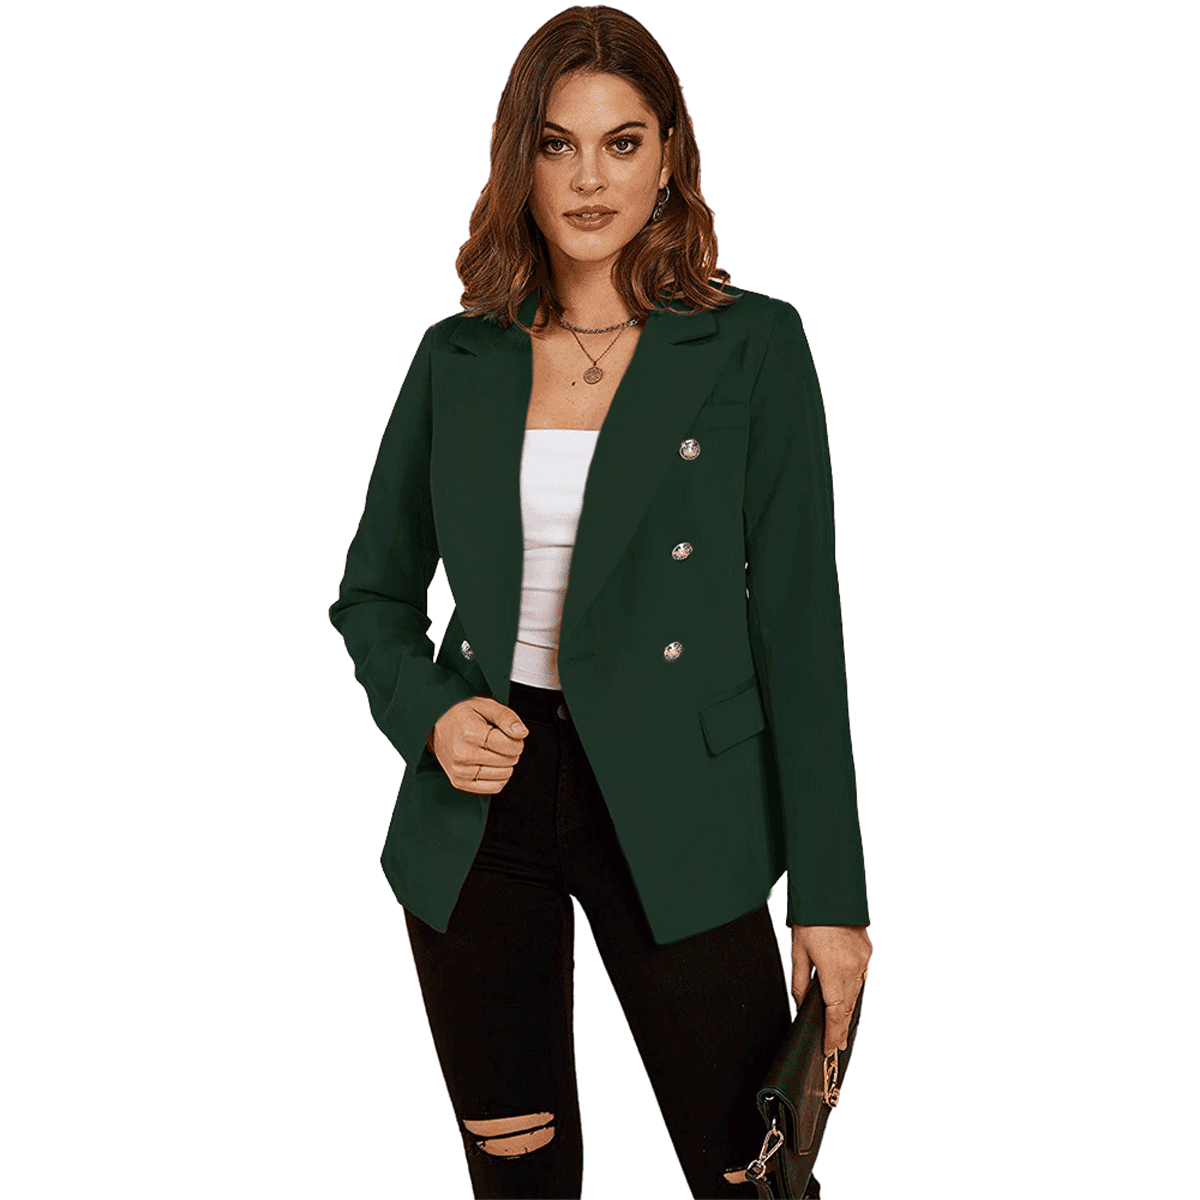 Jeanewpole1 Womens Casual Long Blazer Jacket Lapel Open Front Button Cardigan Suit